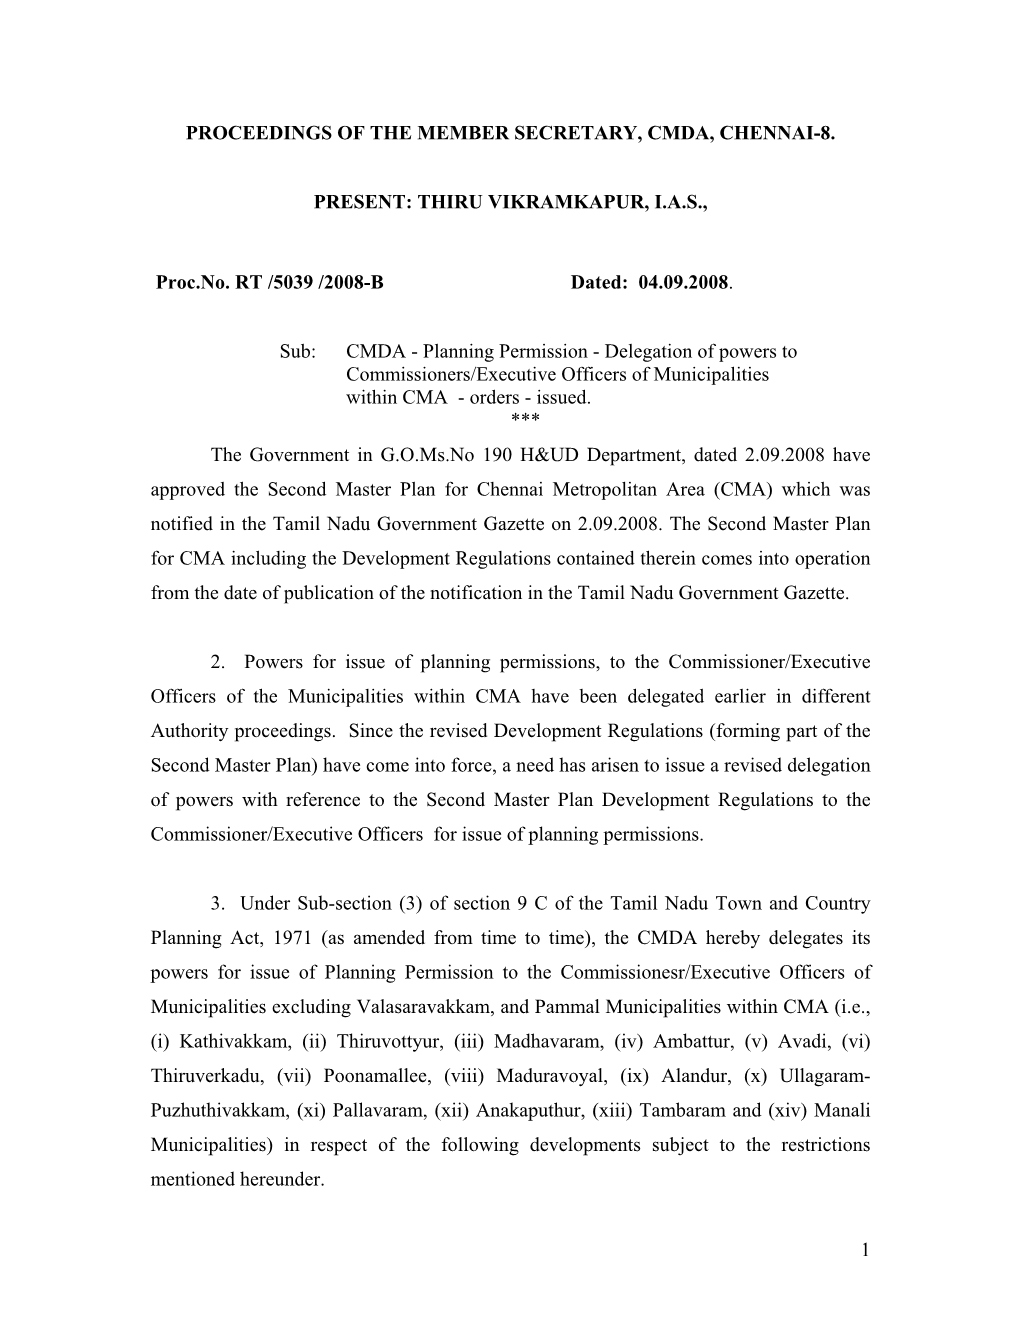 1 PROCEEDINGS of the MEMBER SECRETARY, CMDA, CHENNAI-8. PRESENT: THIRU VIKRAMKAPUR, I.A.S., Proc.No. RT /5039 /2008-B Dated: 04